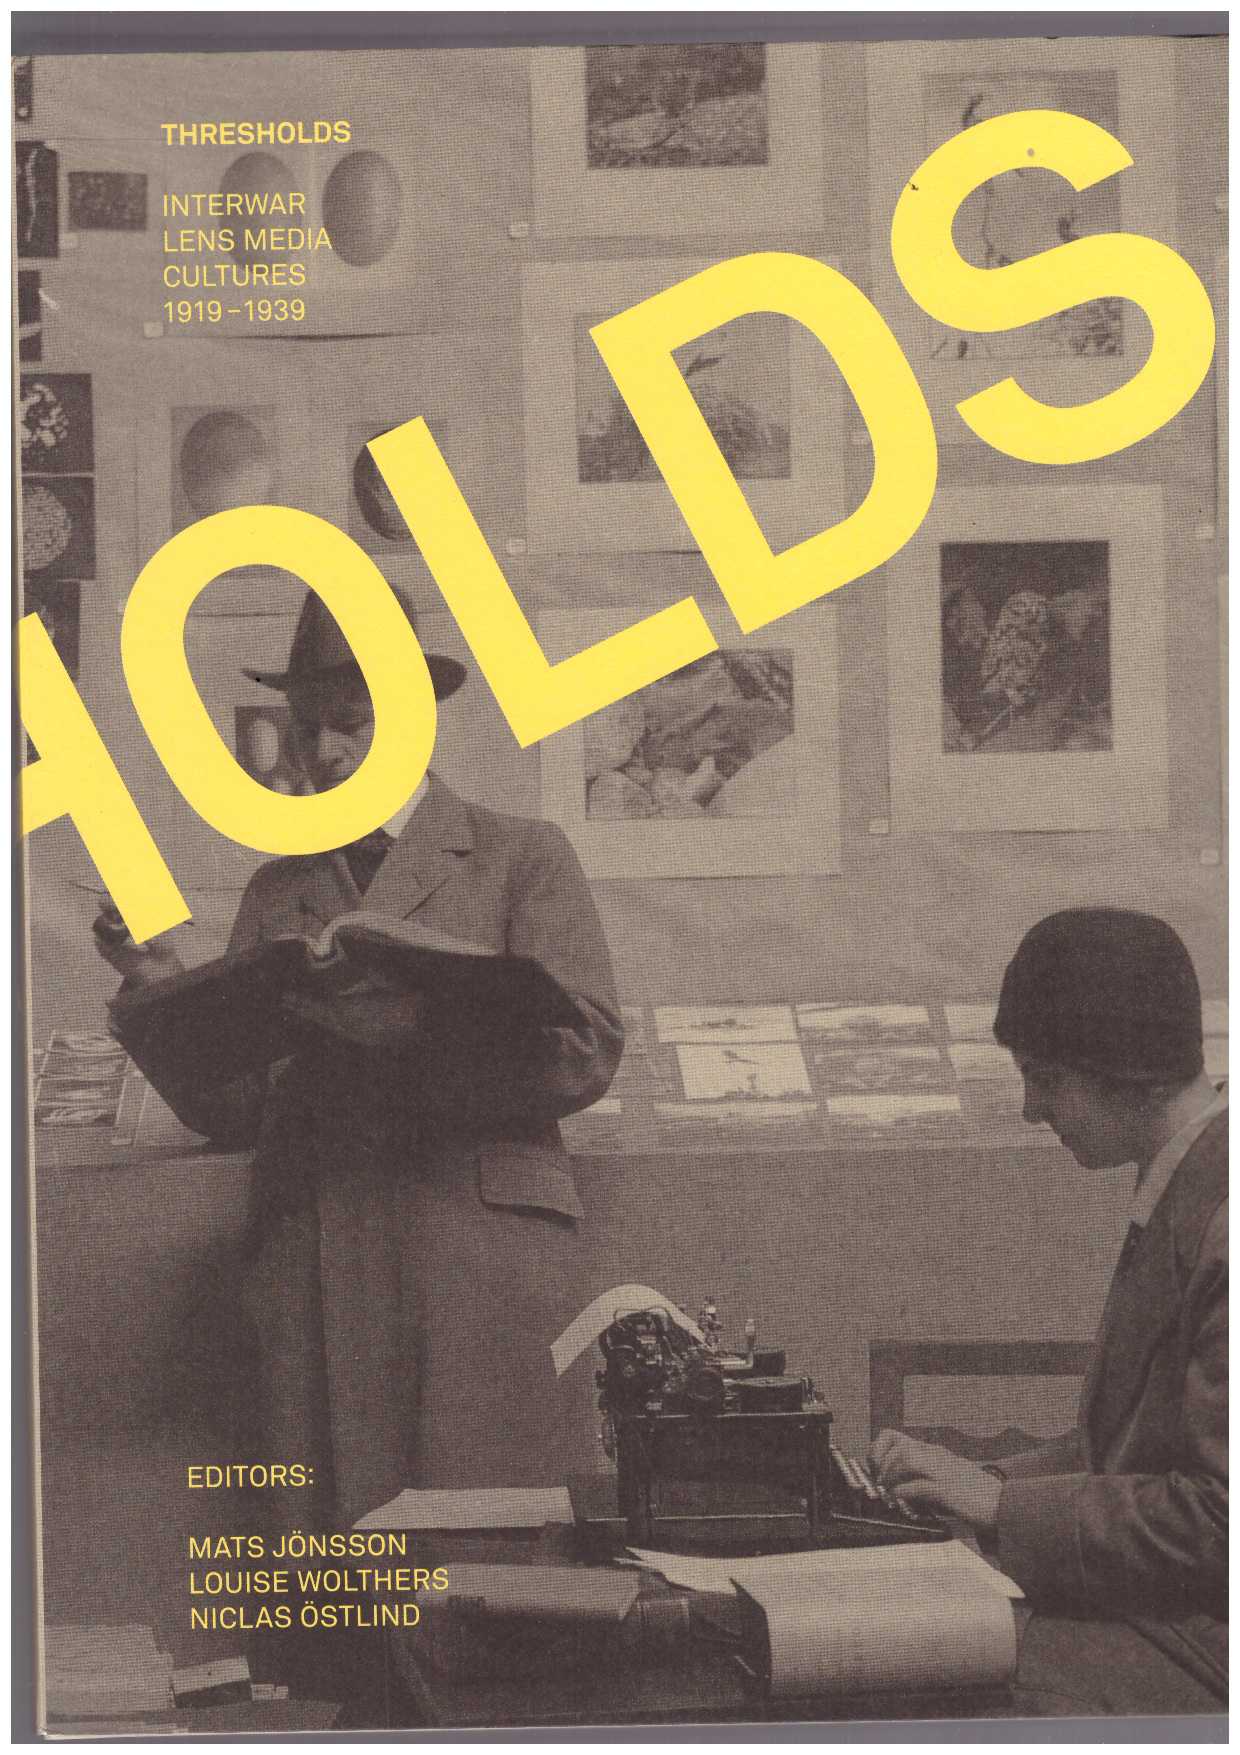 JÖNSSON, Mats; WOLTHERS, Louise; ÖSTLIND, Niclas (eds.) - THRESHOLDS. Interwar Lens Media Cultures 1919-1939